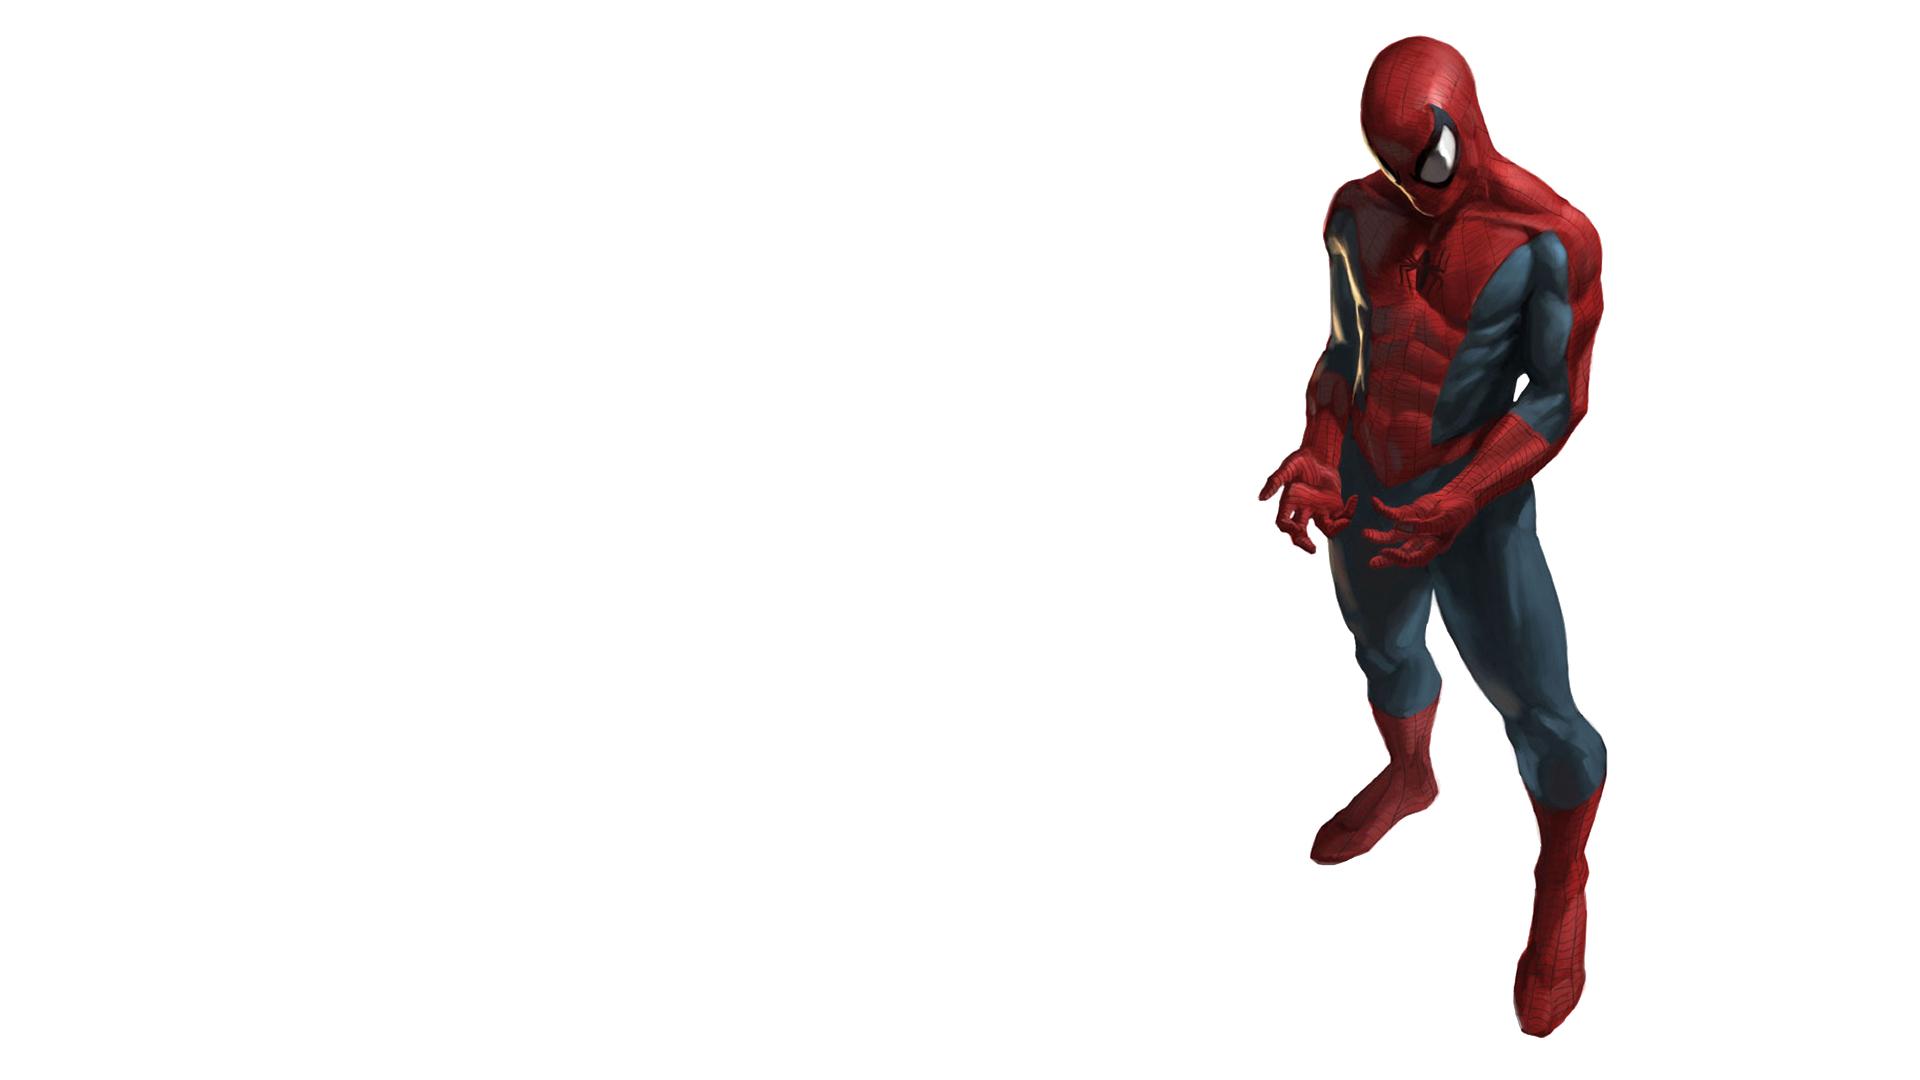 Spiderman Comics Spider-man Superhero over white background Wallpaper